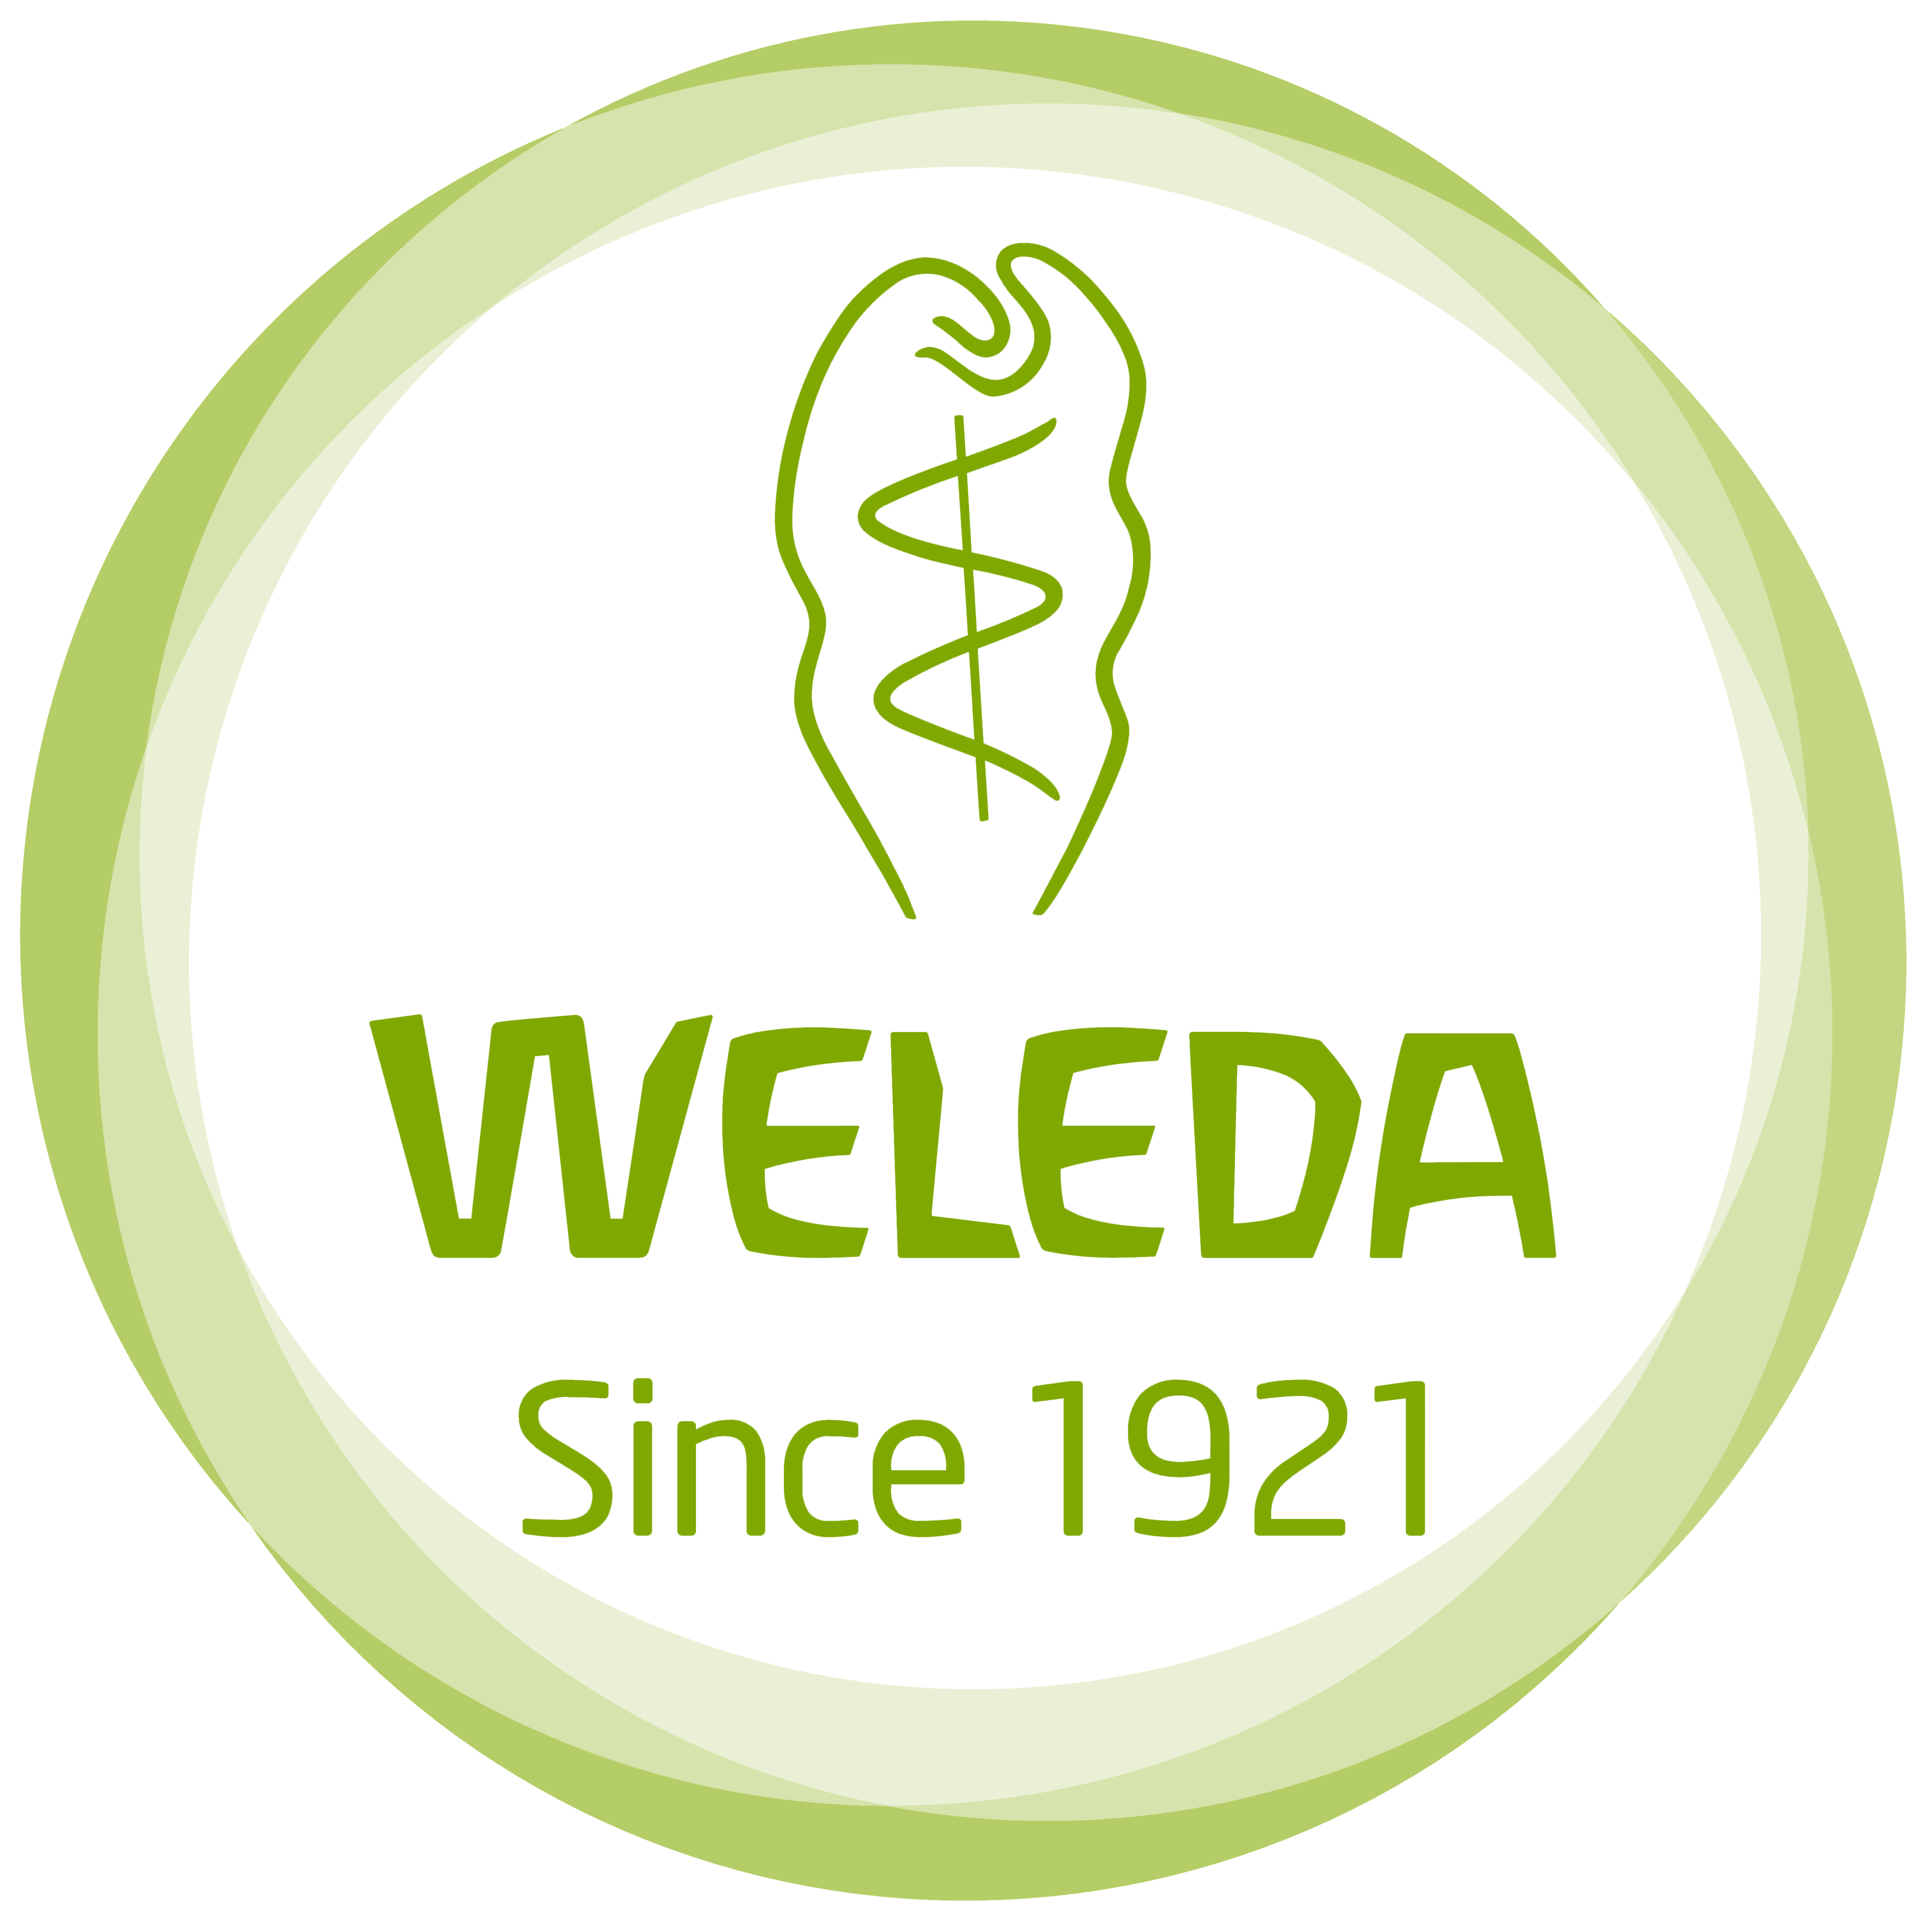 Weleda logo, logotype